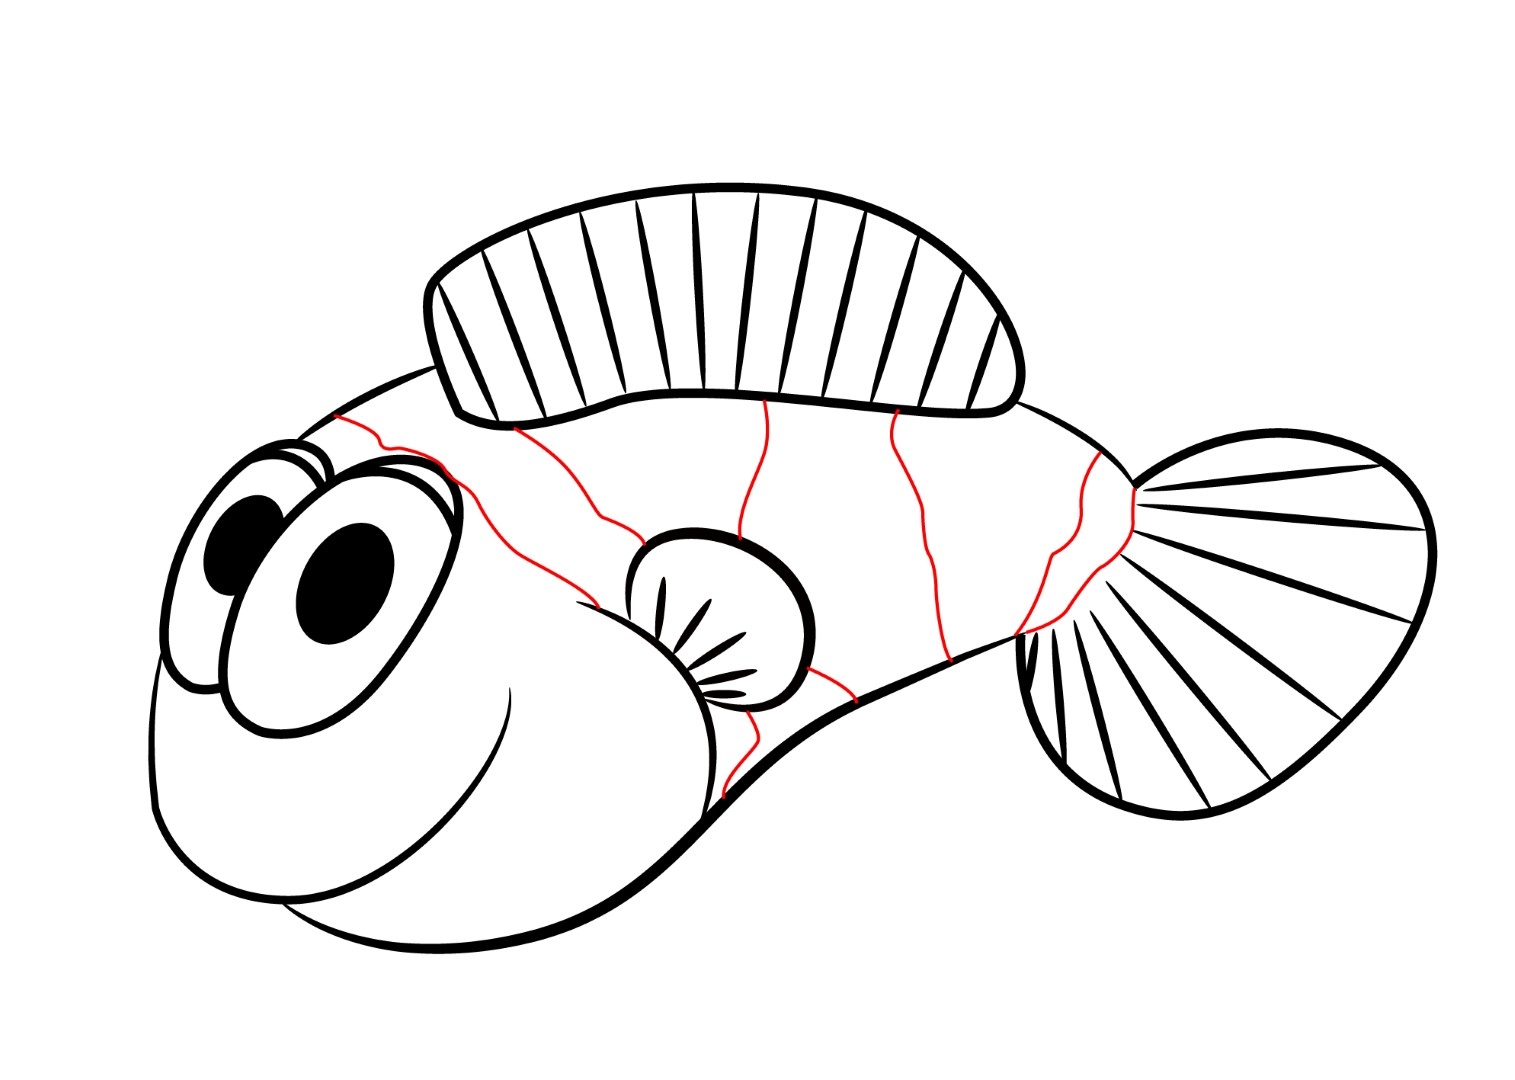 Была рыбка простая. Рыбка рисунок. Рыба клоун раскраска для детей. Рыба клоун рисунок карандашом. HS,F Kjey hfcrhfcrf.